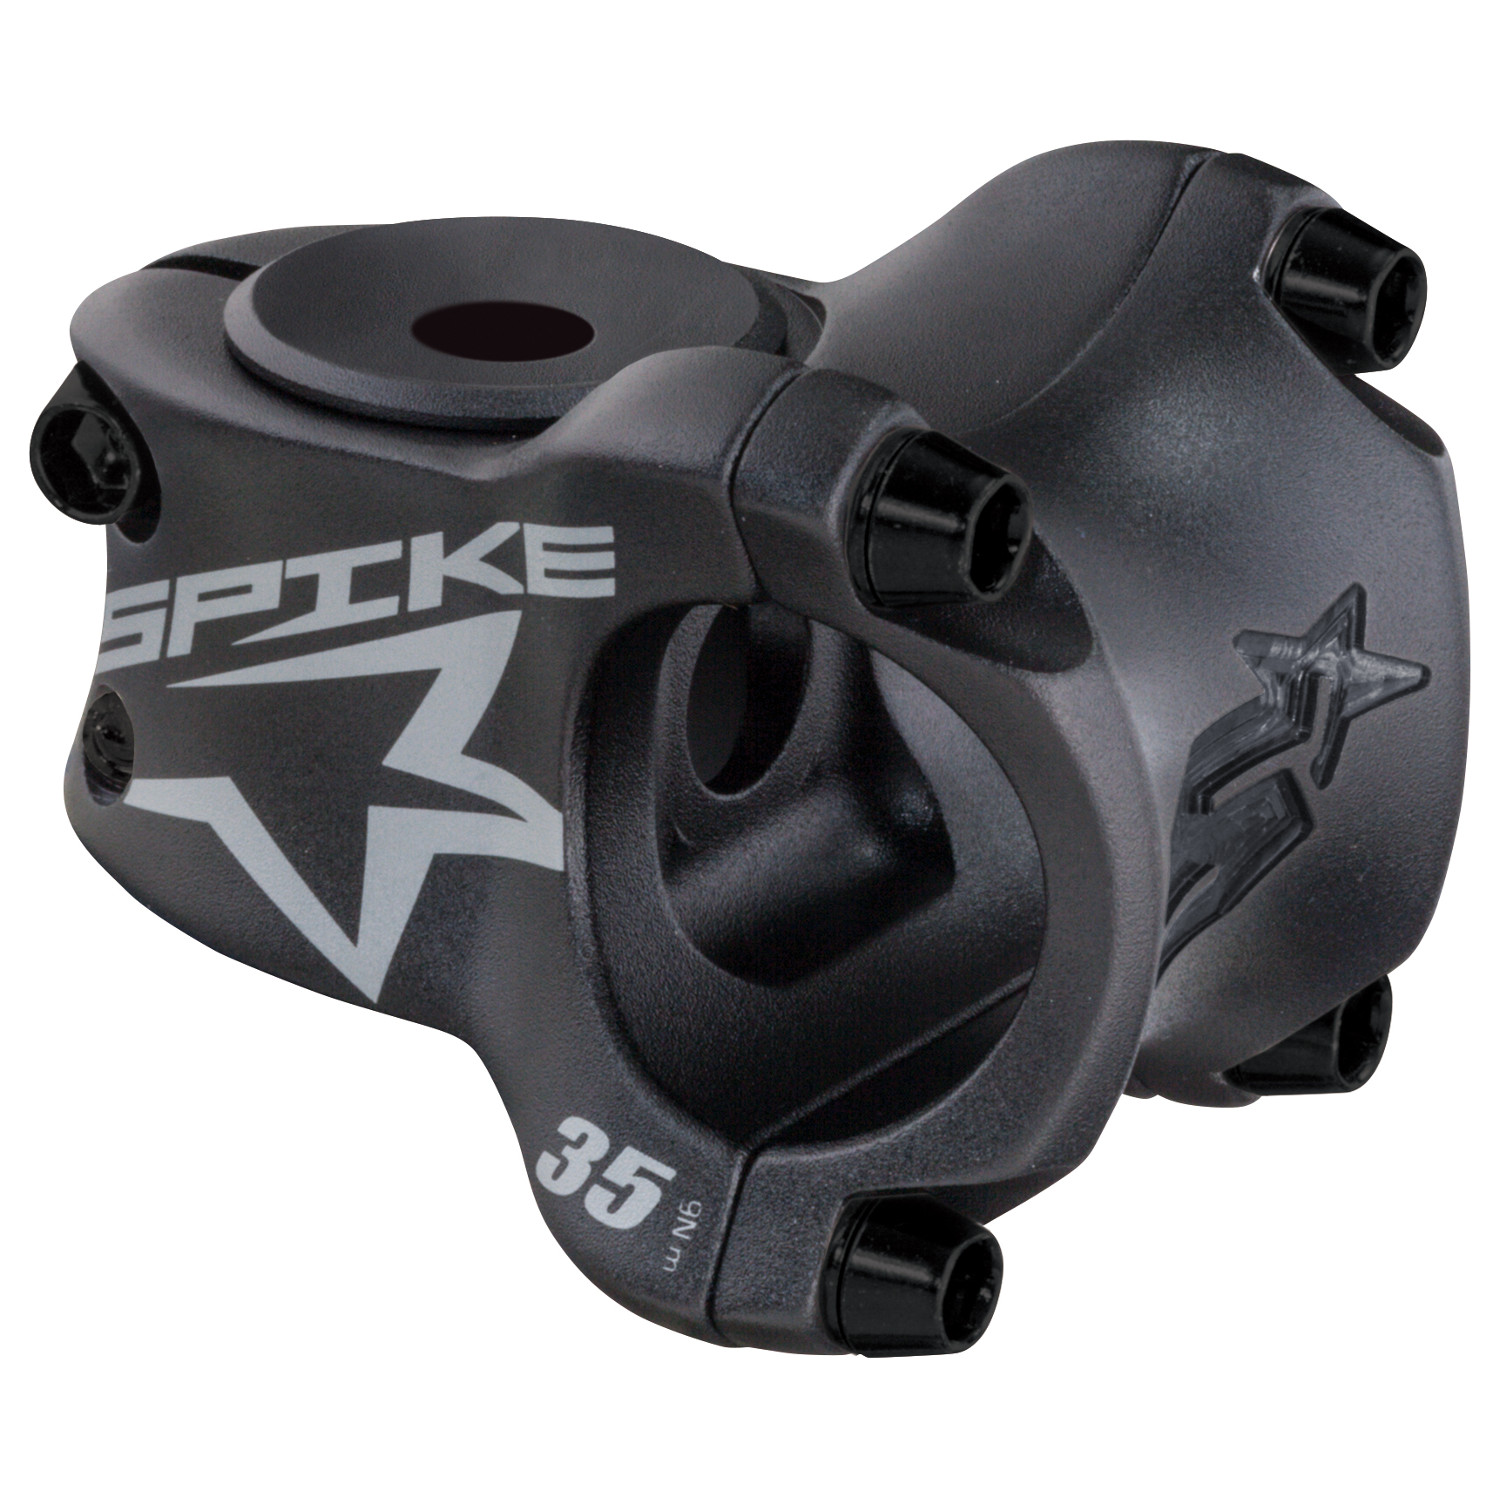 Spank Potence VTT Spike Race, Bearclaw Signature Black/Stealth Grey, 35 mm